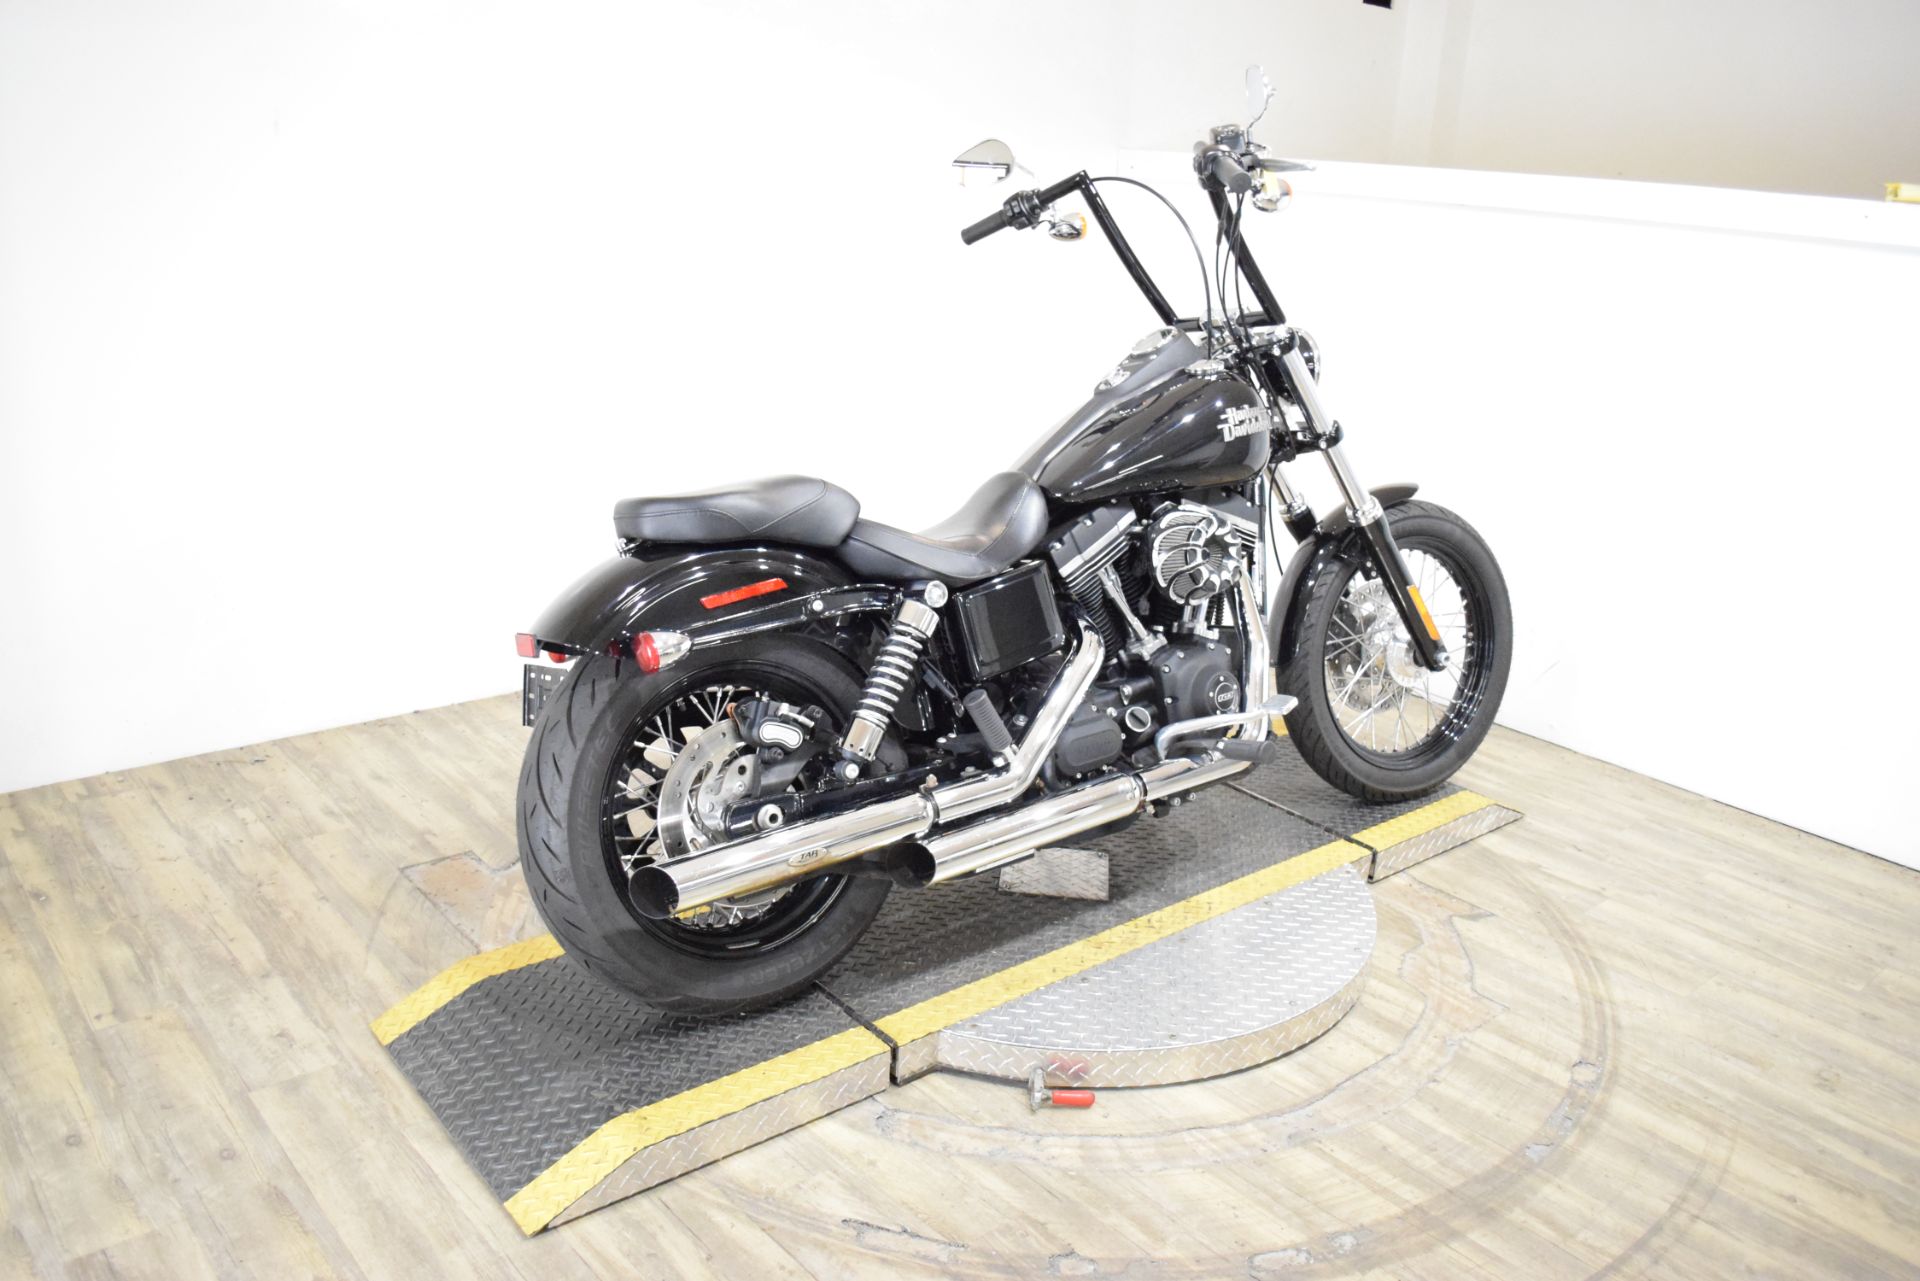 2016 Harley-Davidson Street Bob® in Wauconda, Illinois - Photo 9